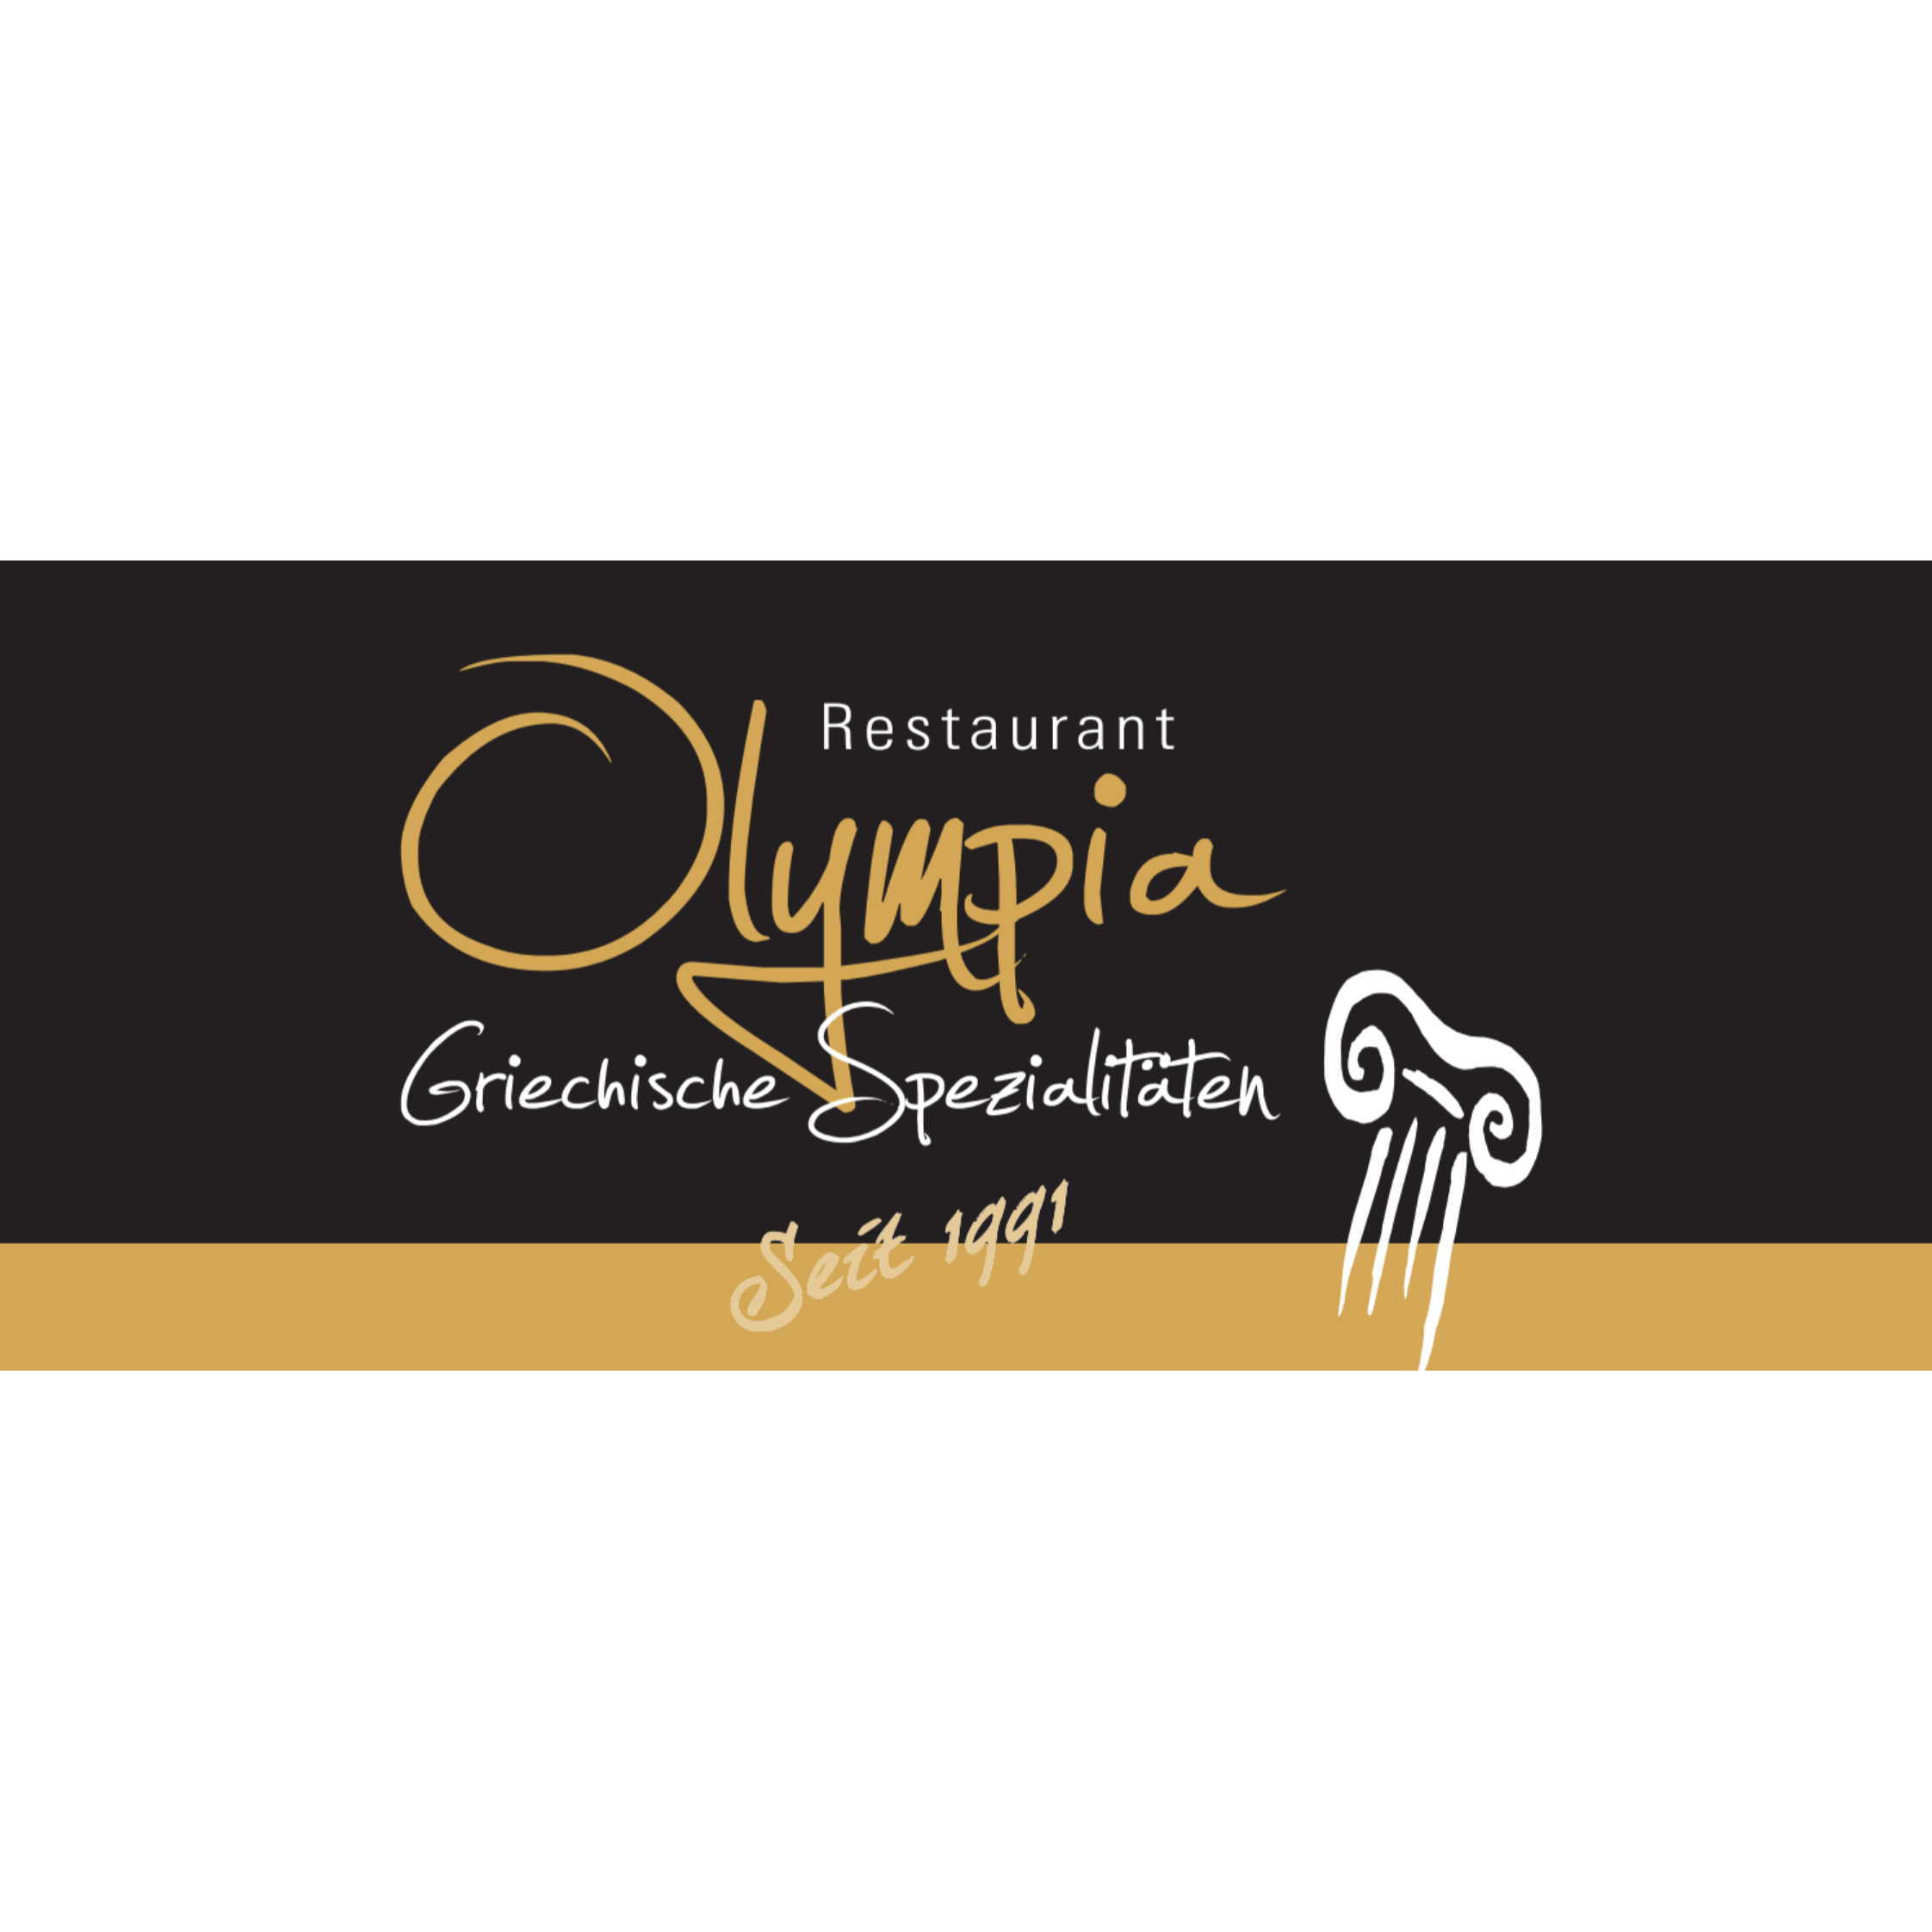 Restaurant Olympia Logo